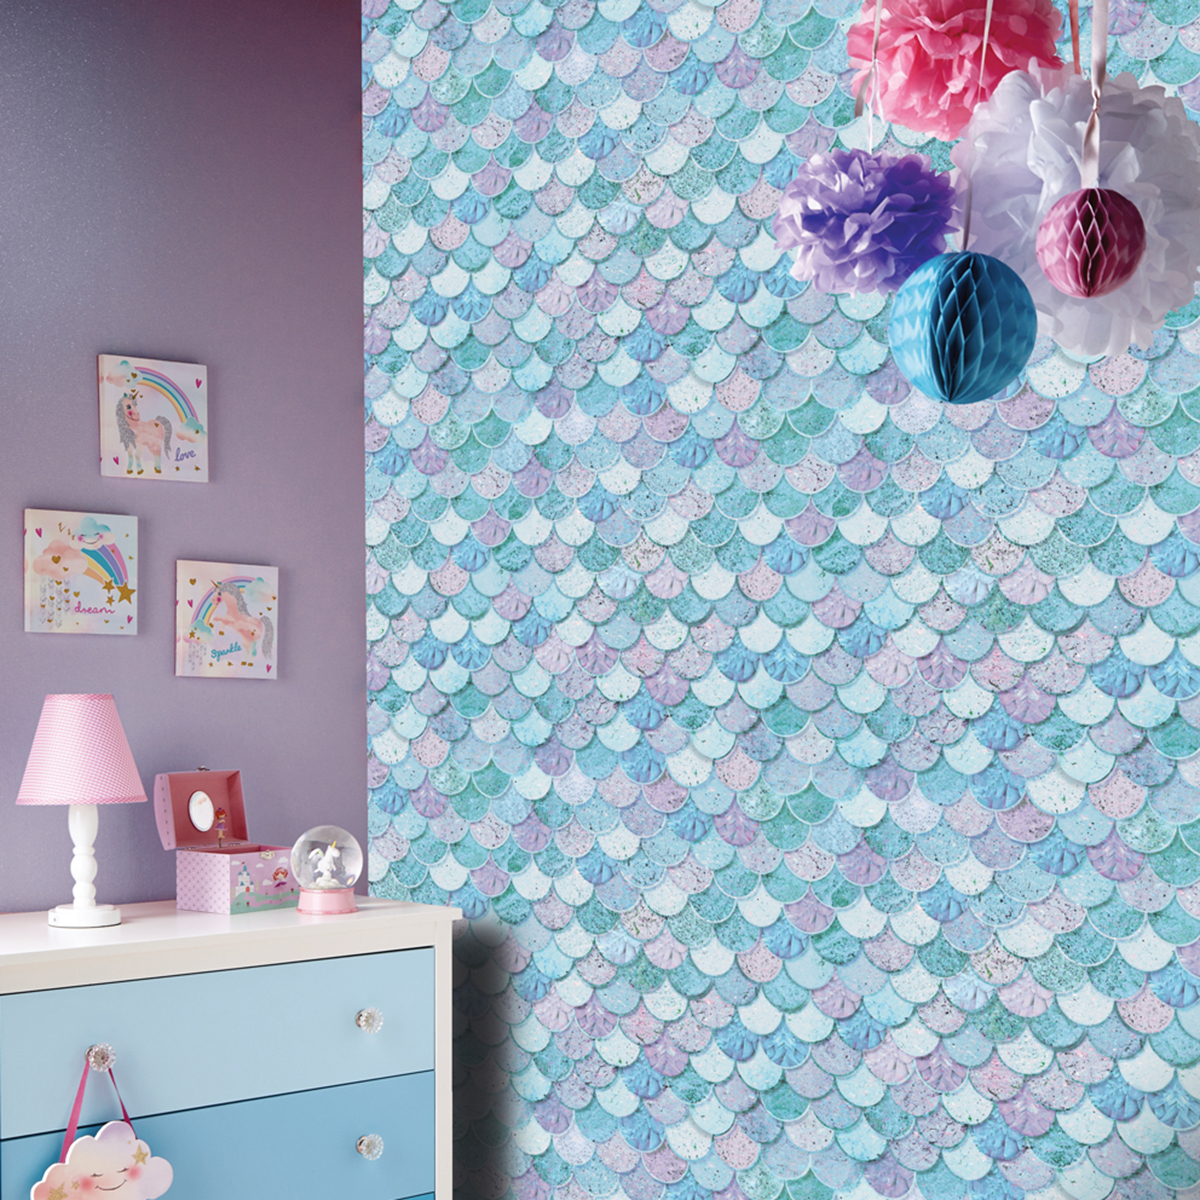 Mermazing Mermaid Scales Glitter Wallpaper - Ice Blue and Aqua - Arthouse 698305